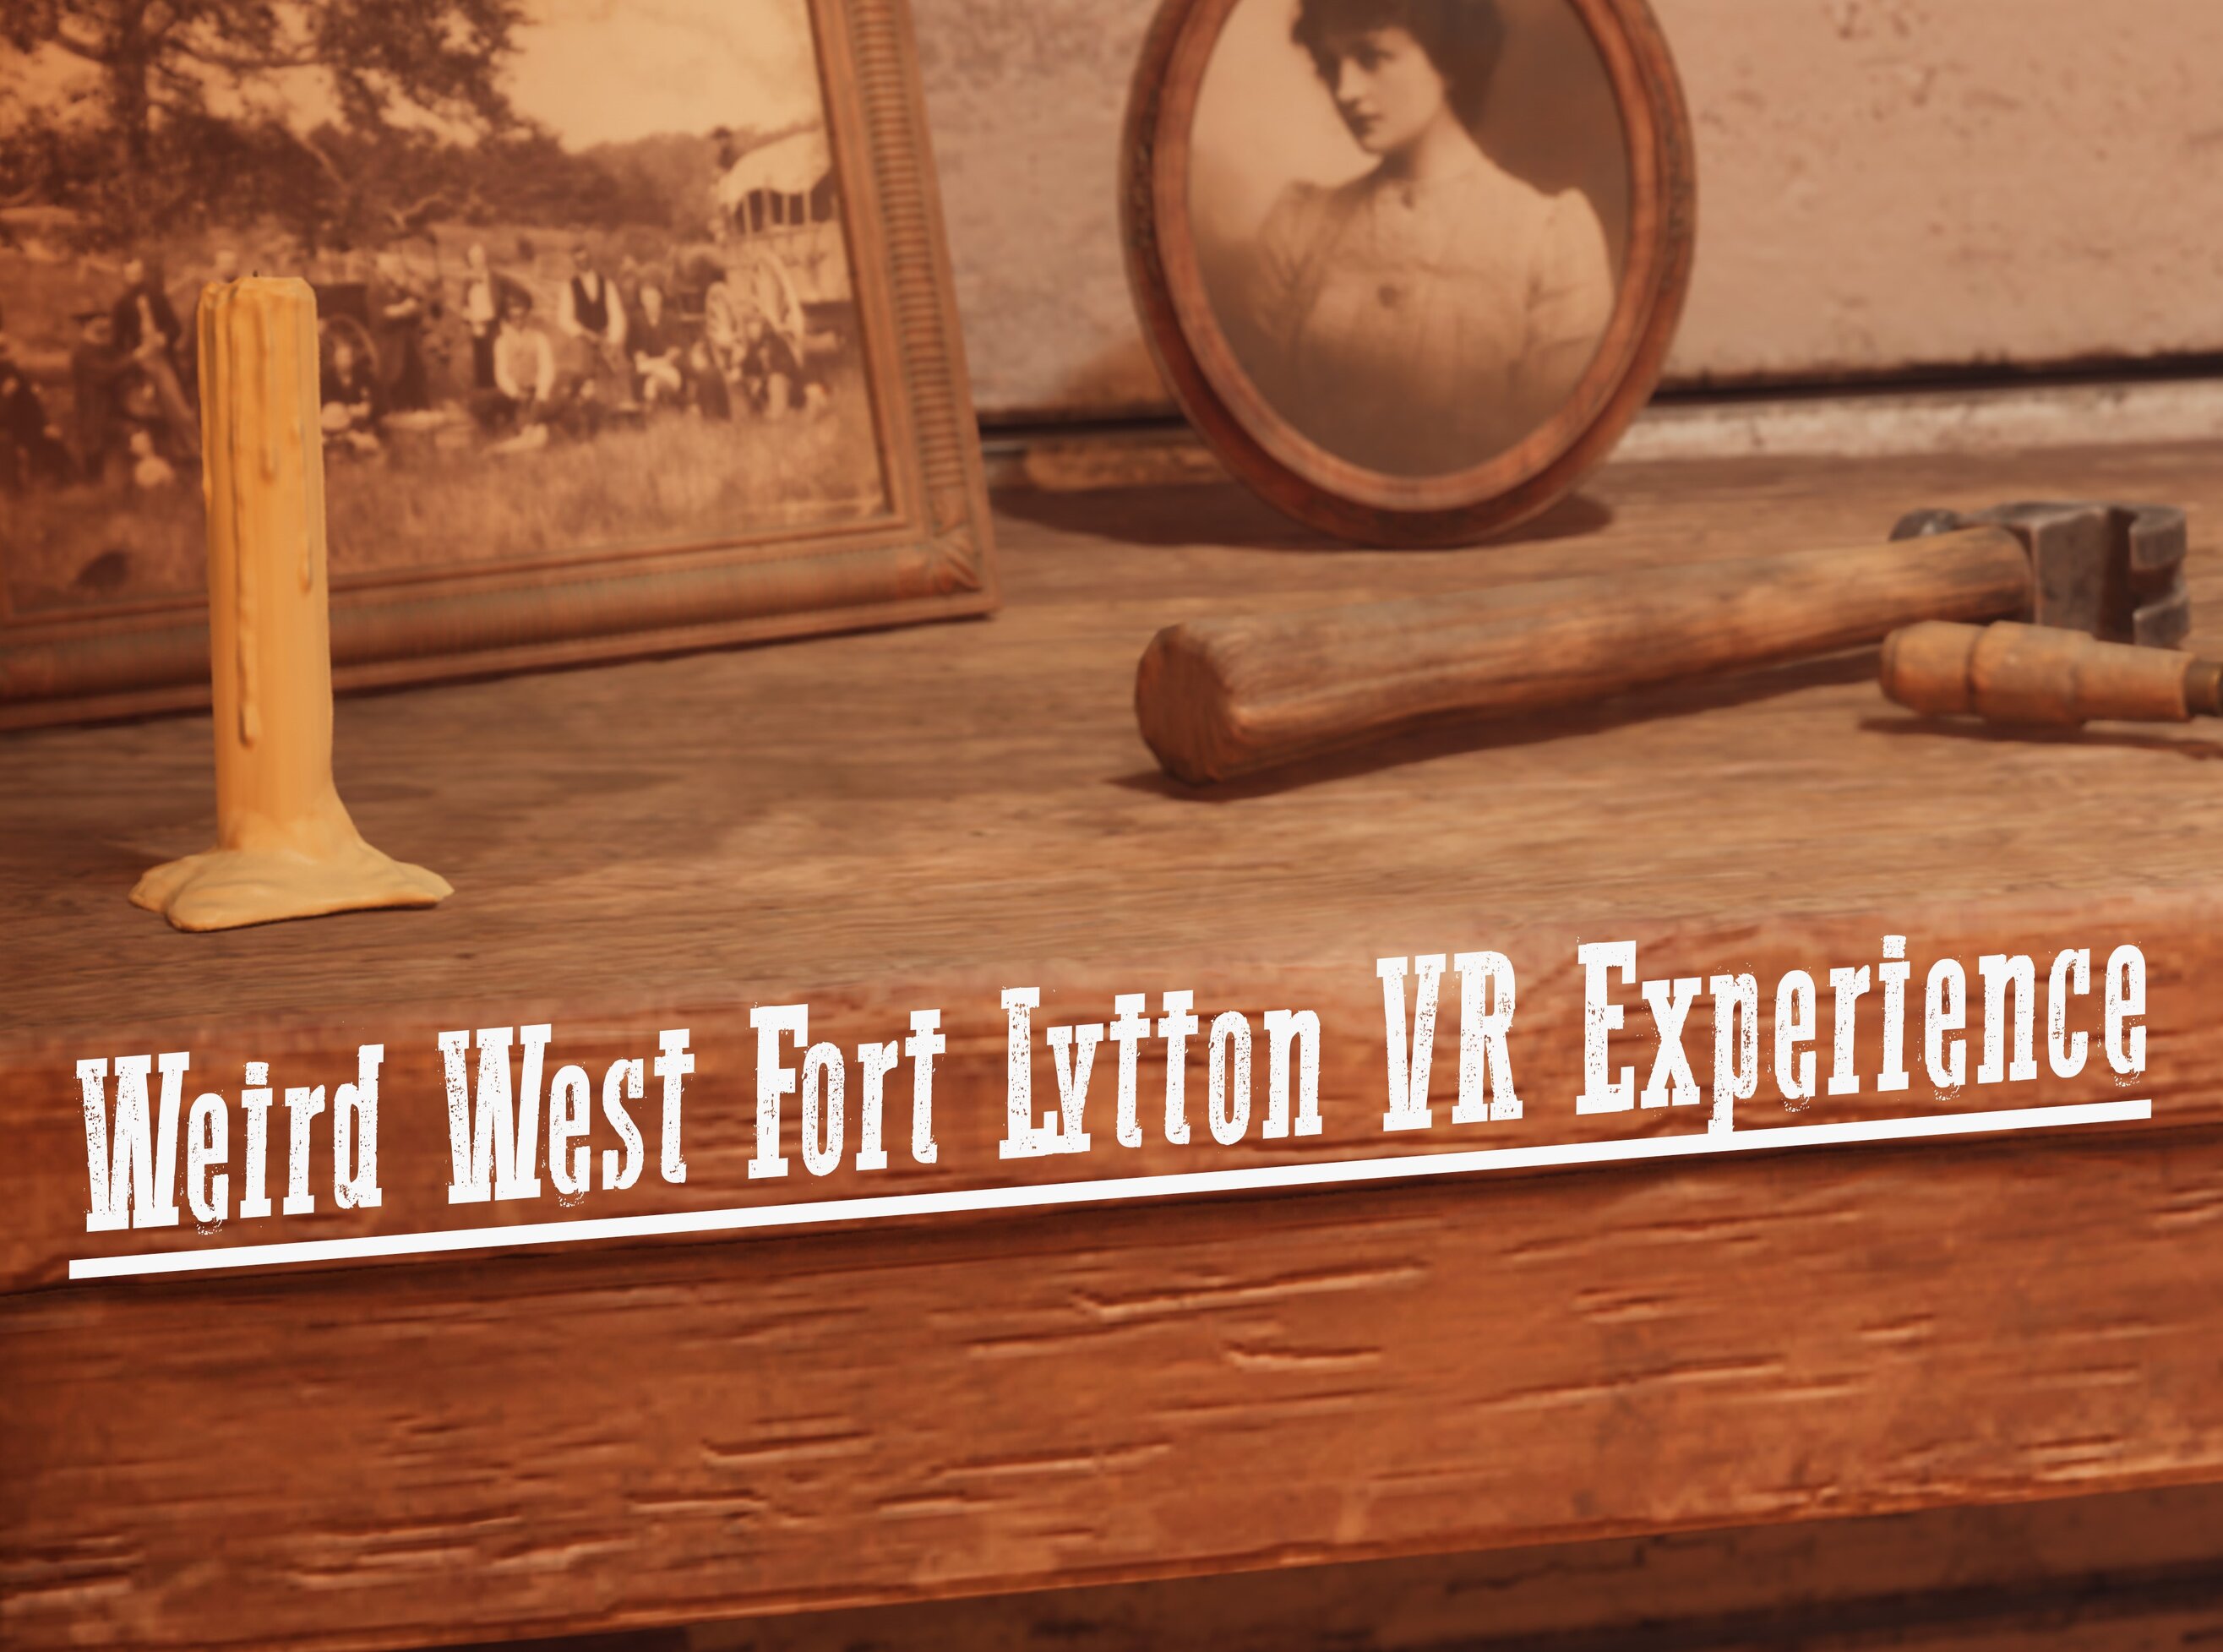 Weird West Fort Lytton VR Experience